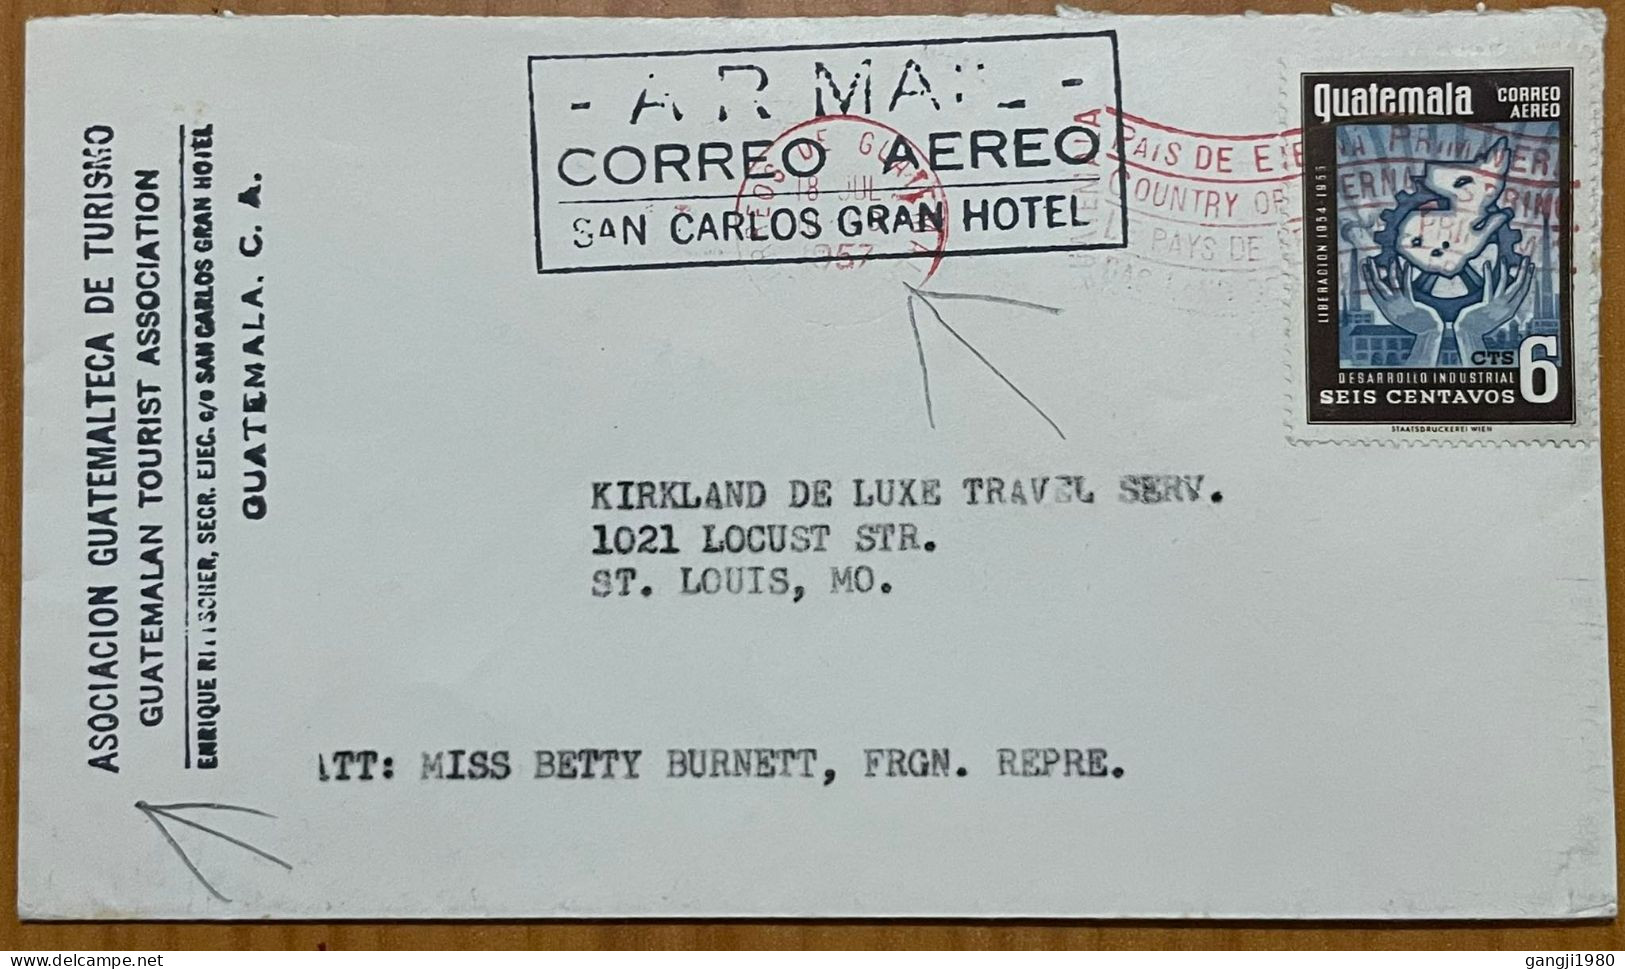 GUATEMALA 1957, COVER USED TO USA, ADVERTISING SAN CARLOS GRAND HOTEL & TOURISM ASSOCIATION, METER CANCEL REVERSE PRINT, - Guatemala